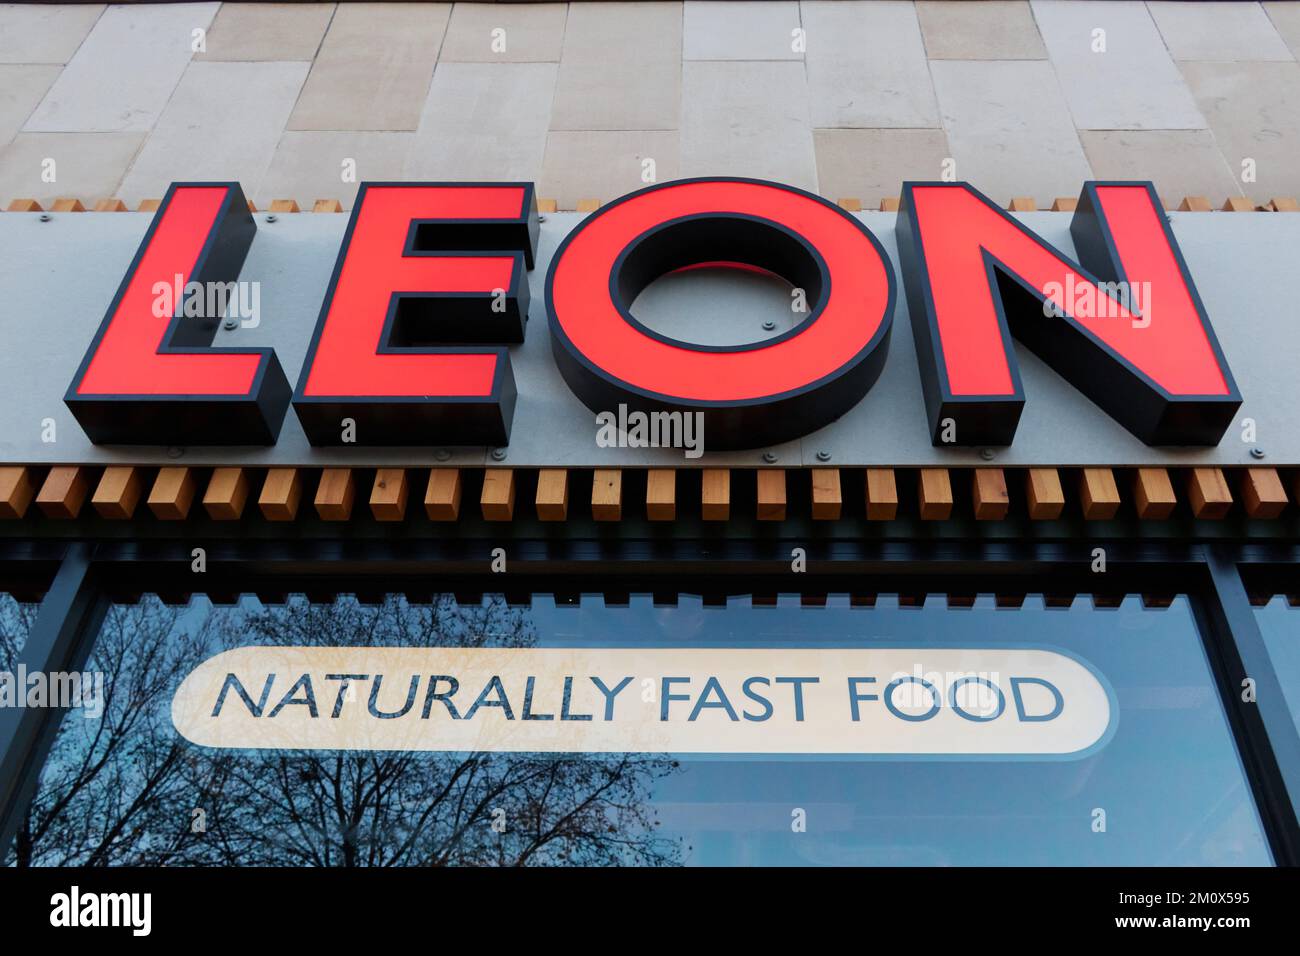 Leon restaurant, sign. Stock Photo